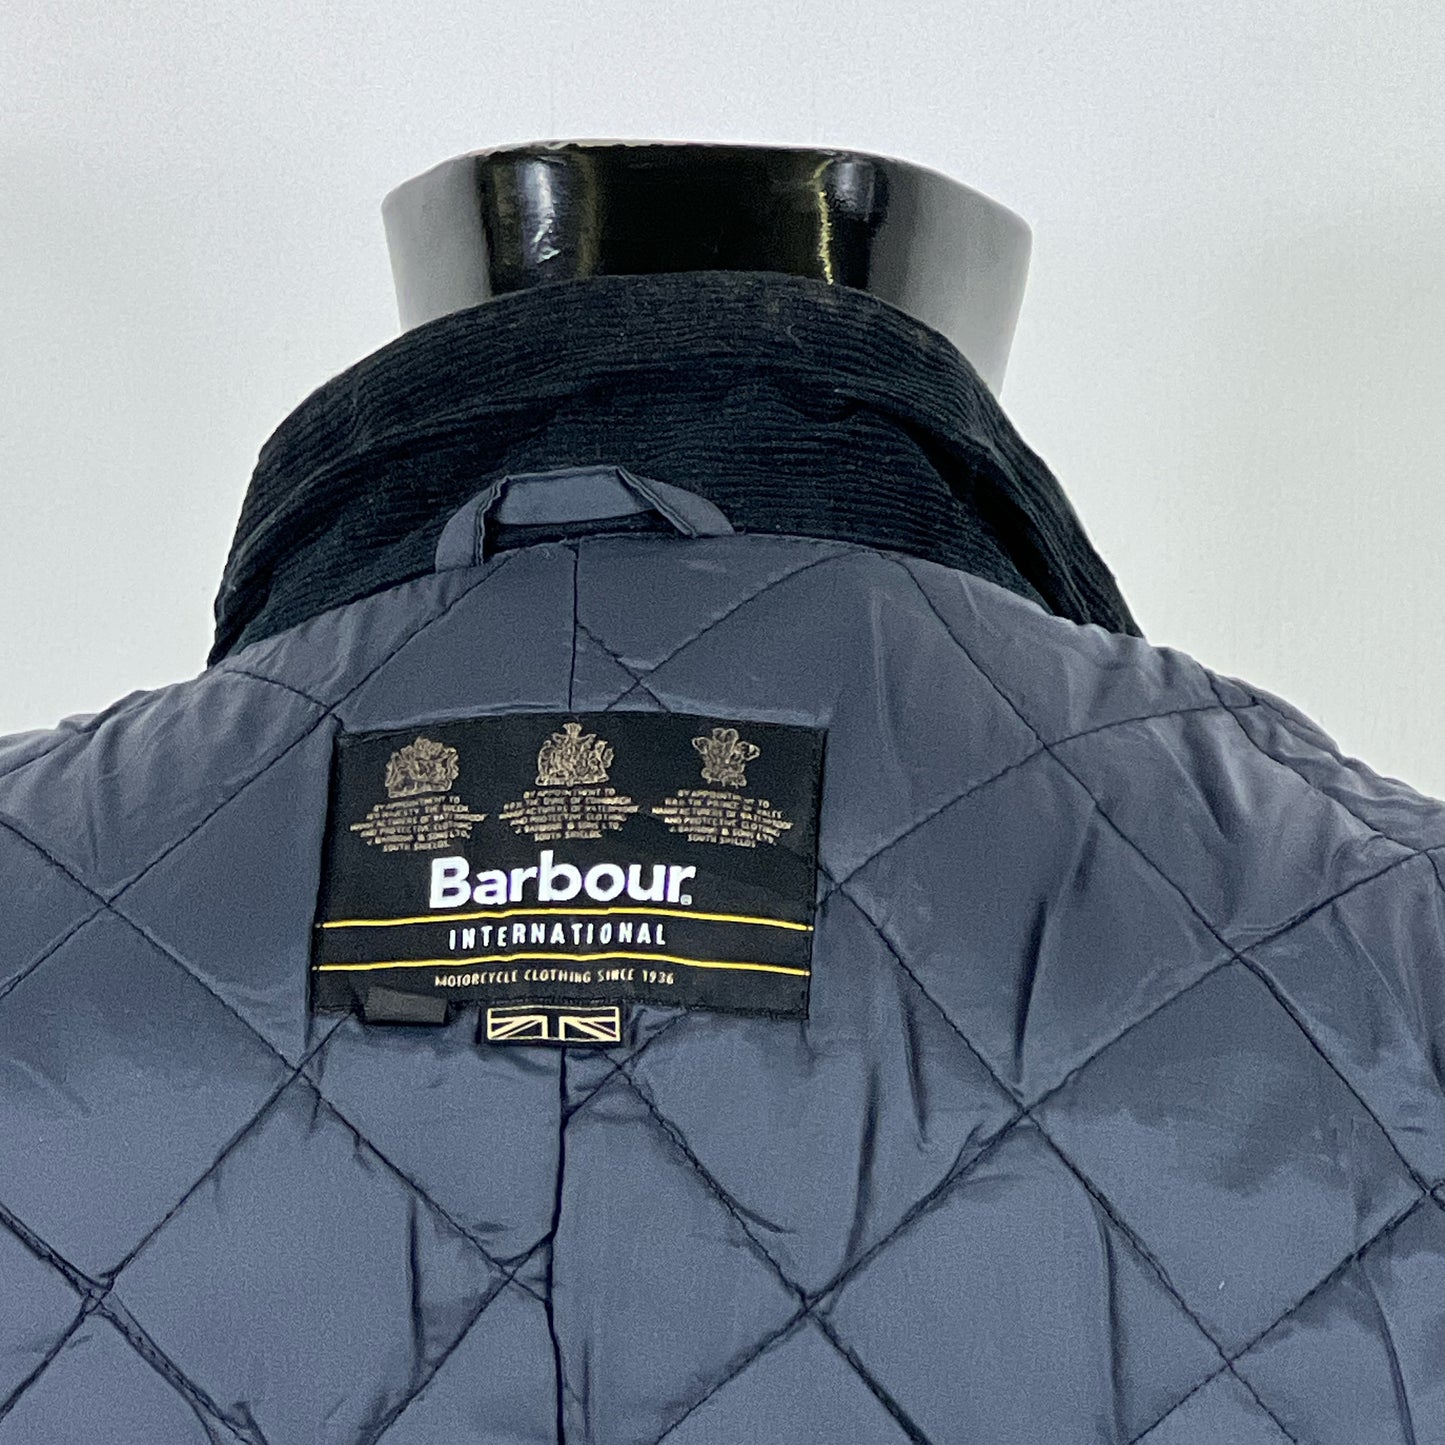 Giacca Barbour International Uomo Duke Blu Large - Man Navy Duke wax Jacket Size L